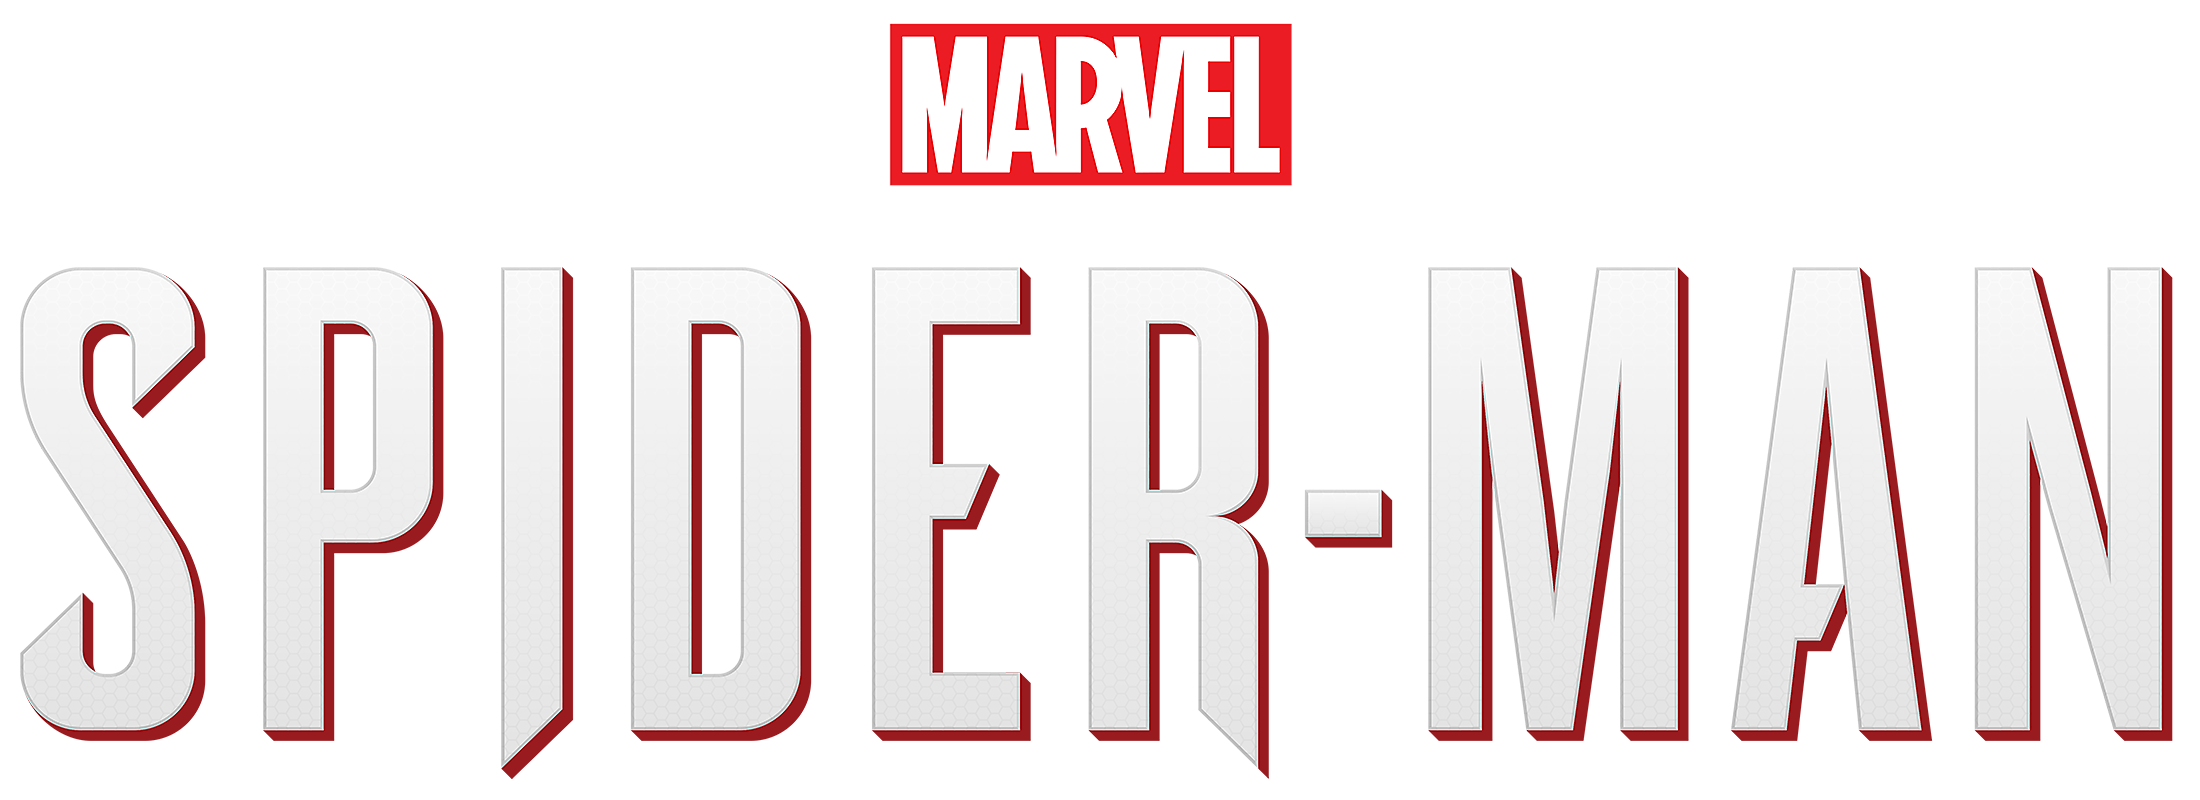 marvel-spider_man-logo-02-ps4-tienda_online_shop